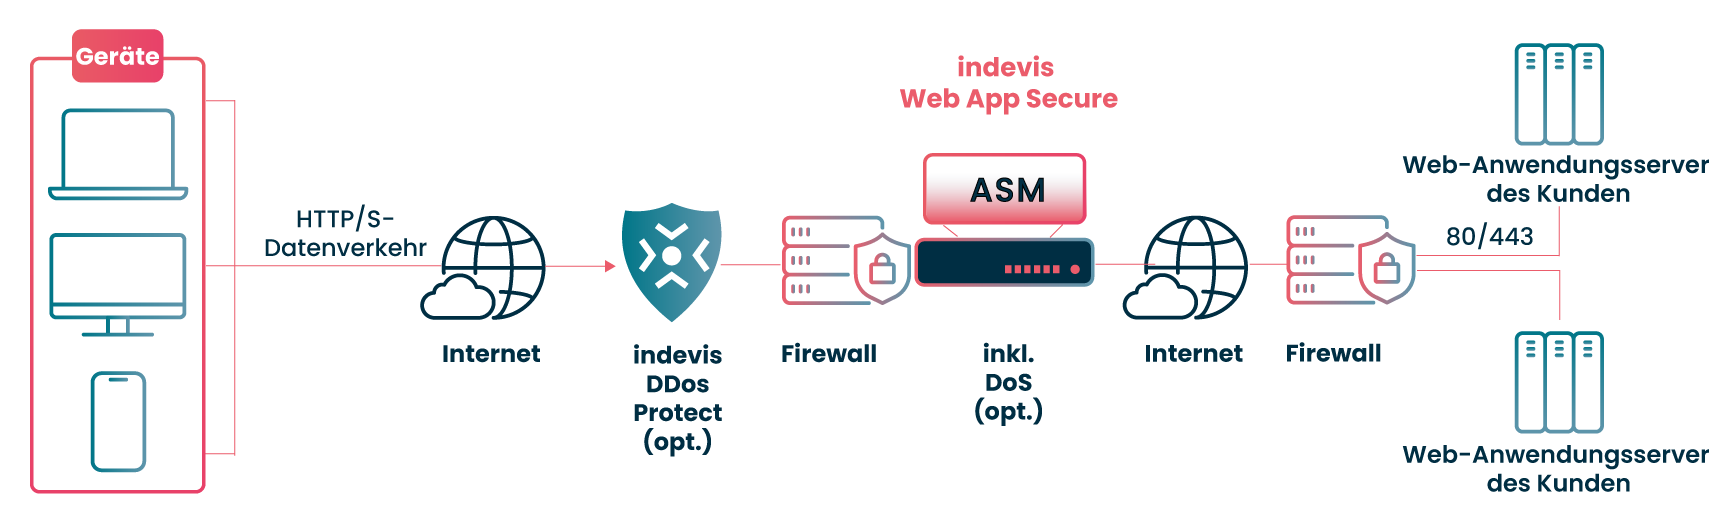 indevis-Web-App-Secure-grafik